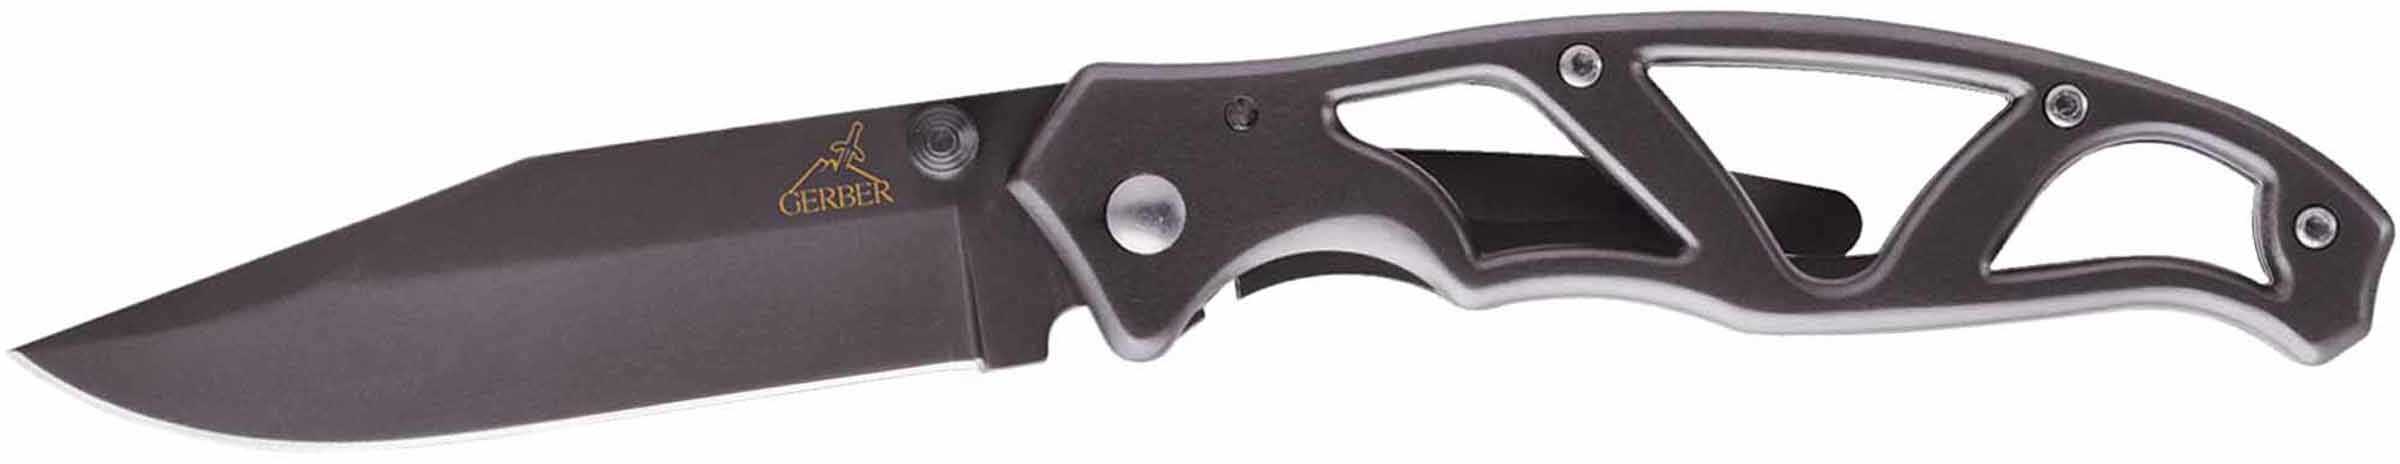 Gerber Folding Knife With Plain Edge Clip Point Blade Md: 08446